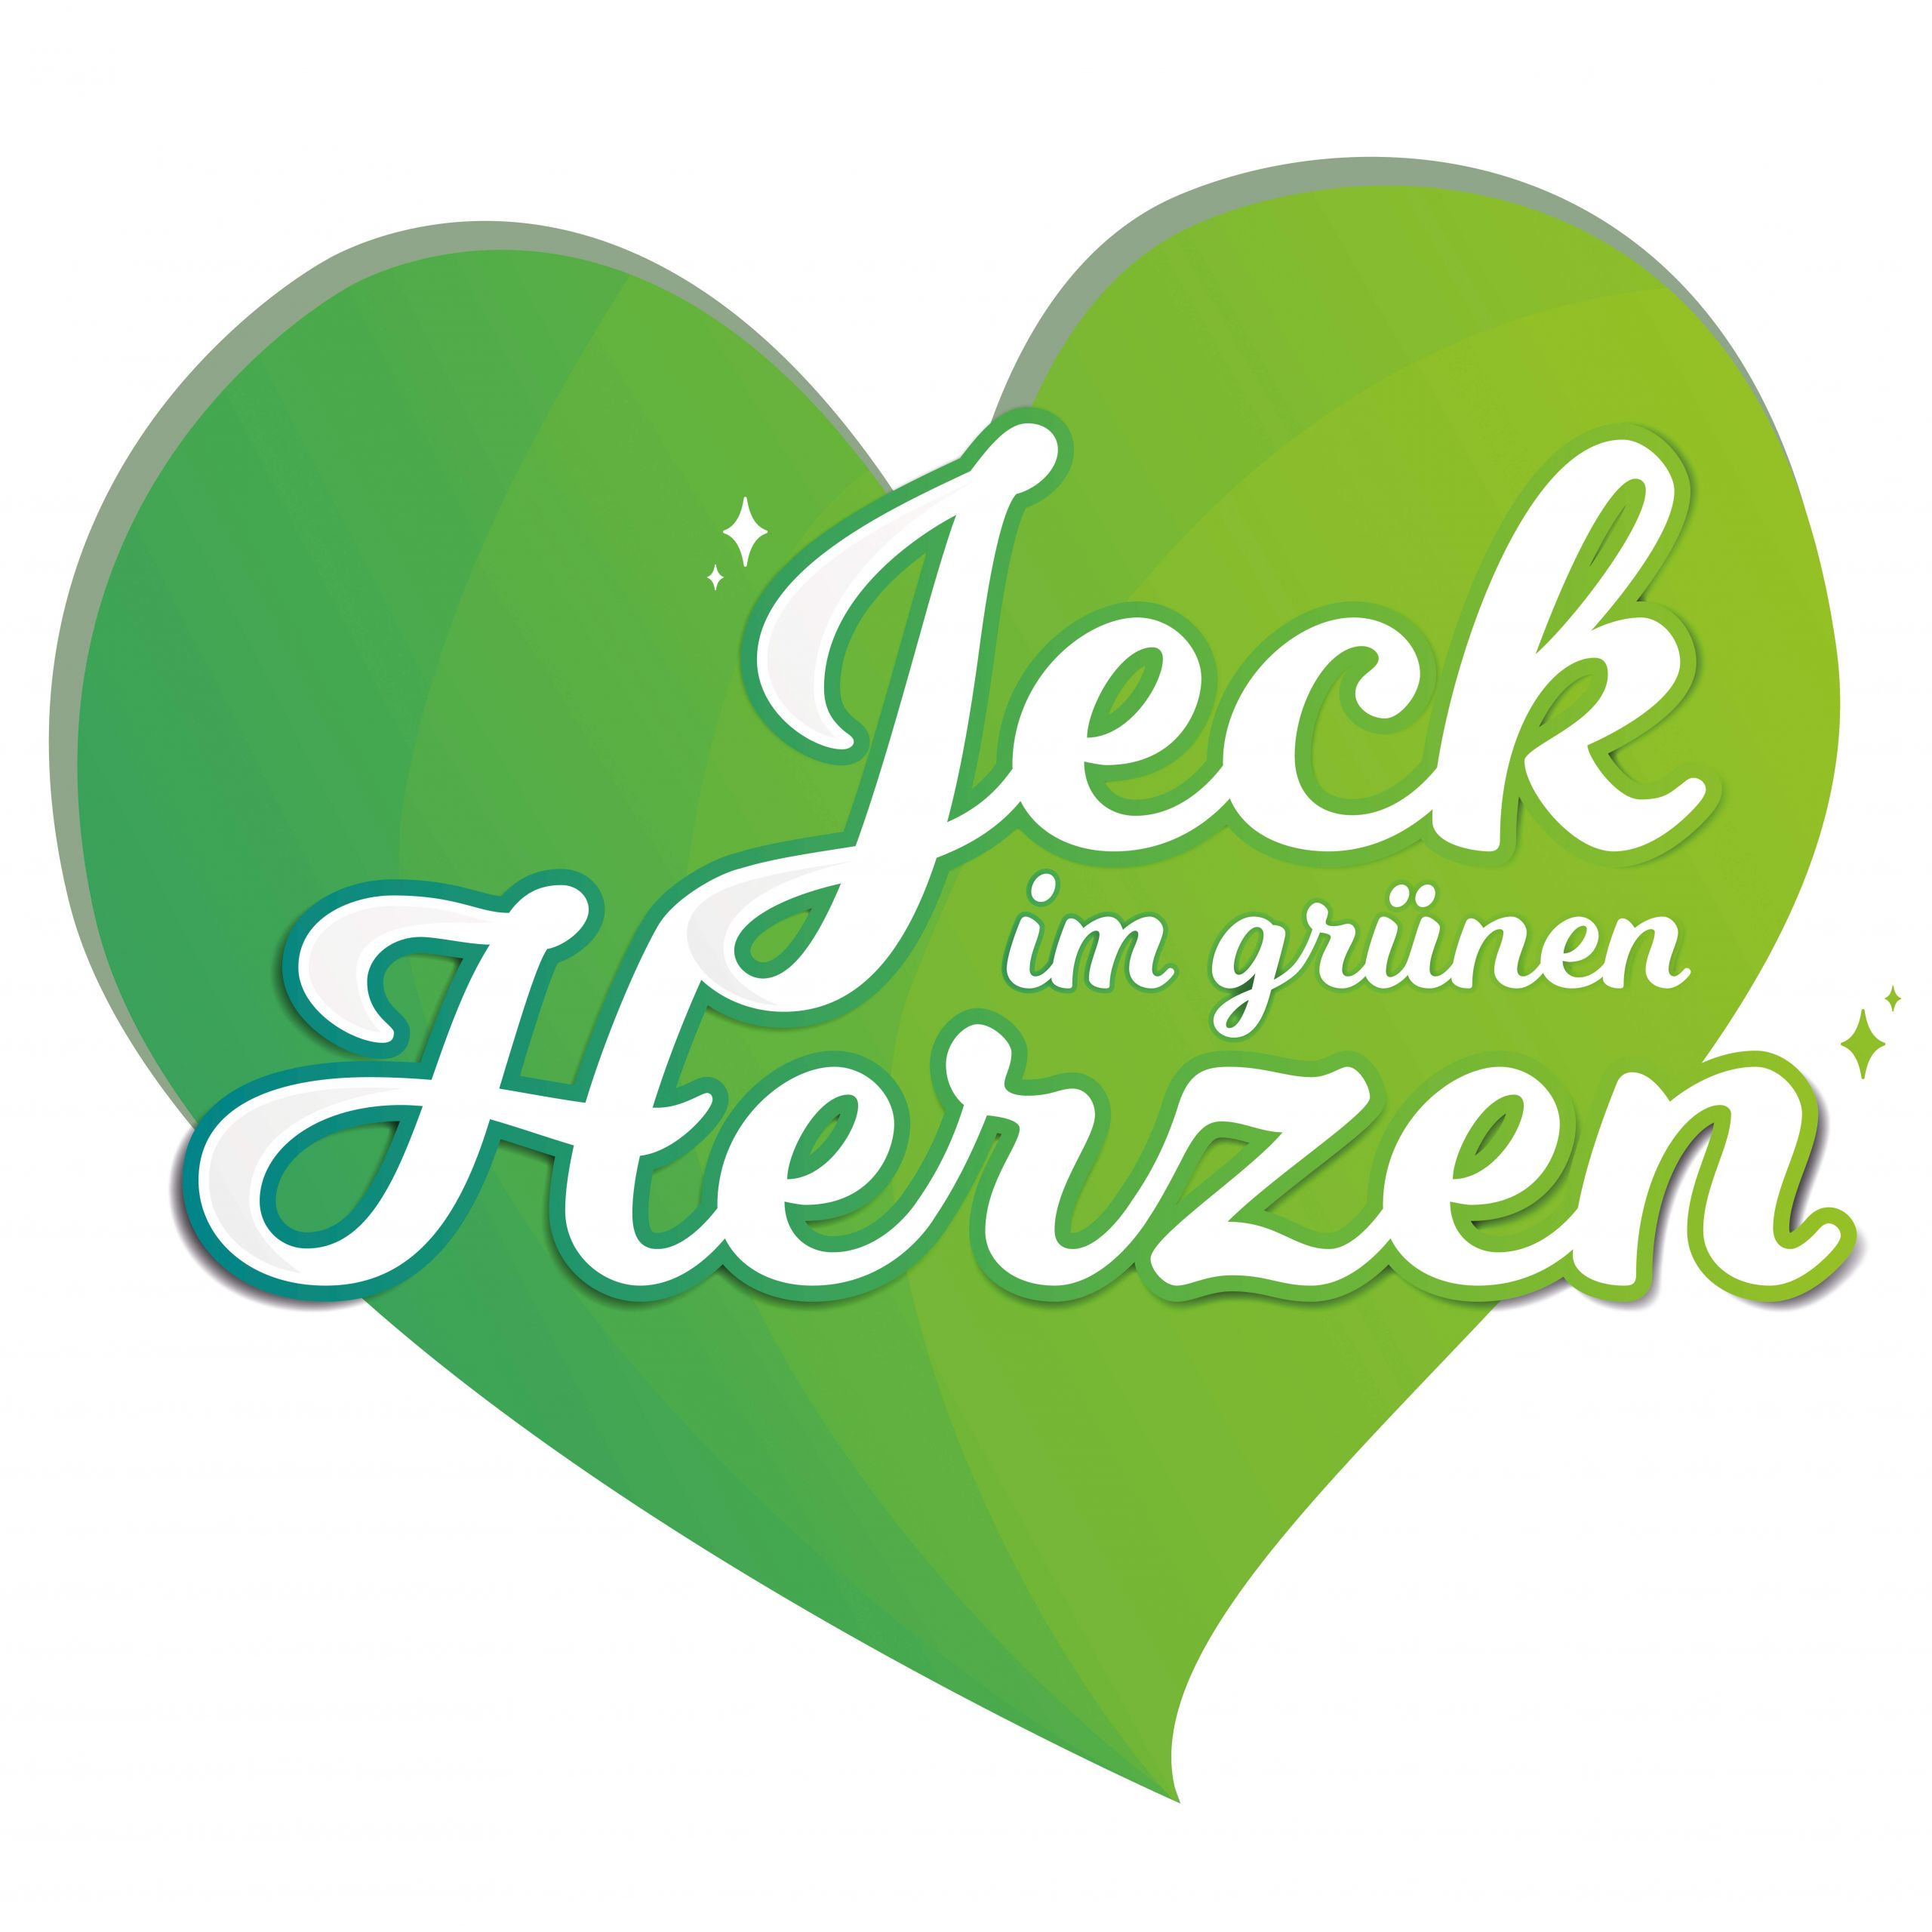 v 01 Jeck im gruenen Herzen Logo 01